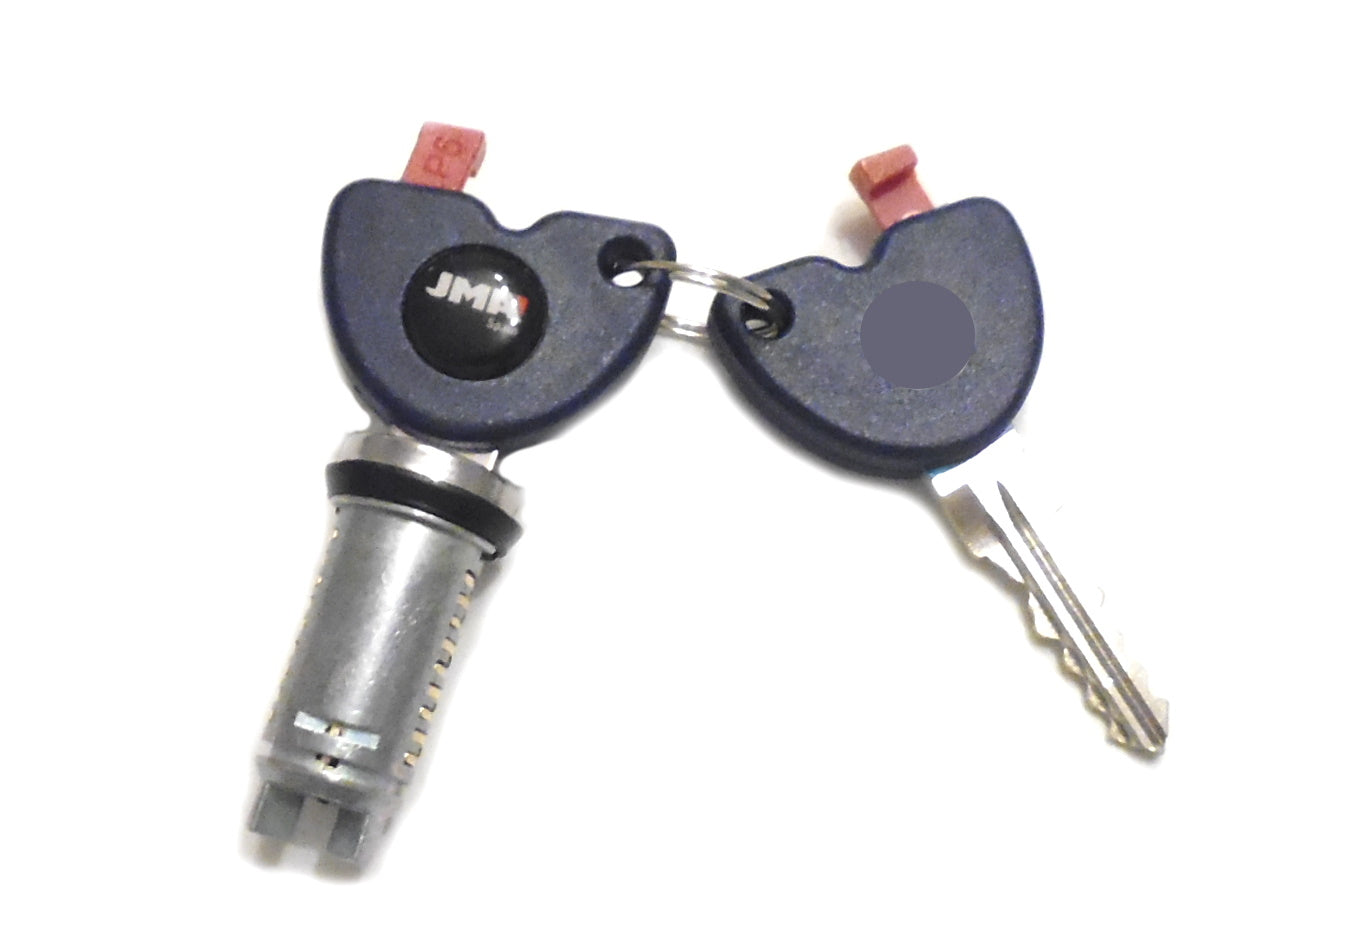 Vespa GTS Keys, With Chip Holder. Lockset and Ignition keys for GTS / GTV / GT